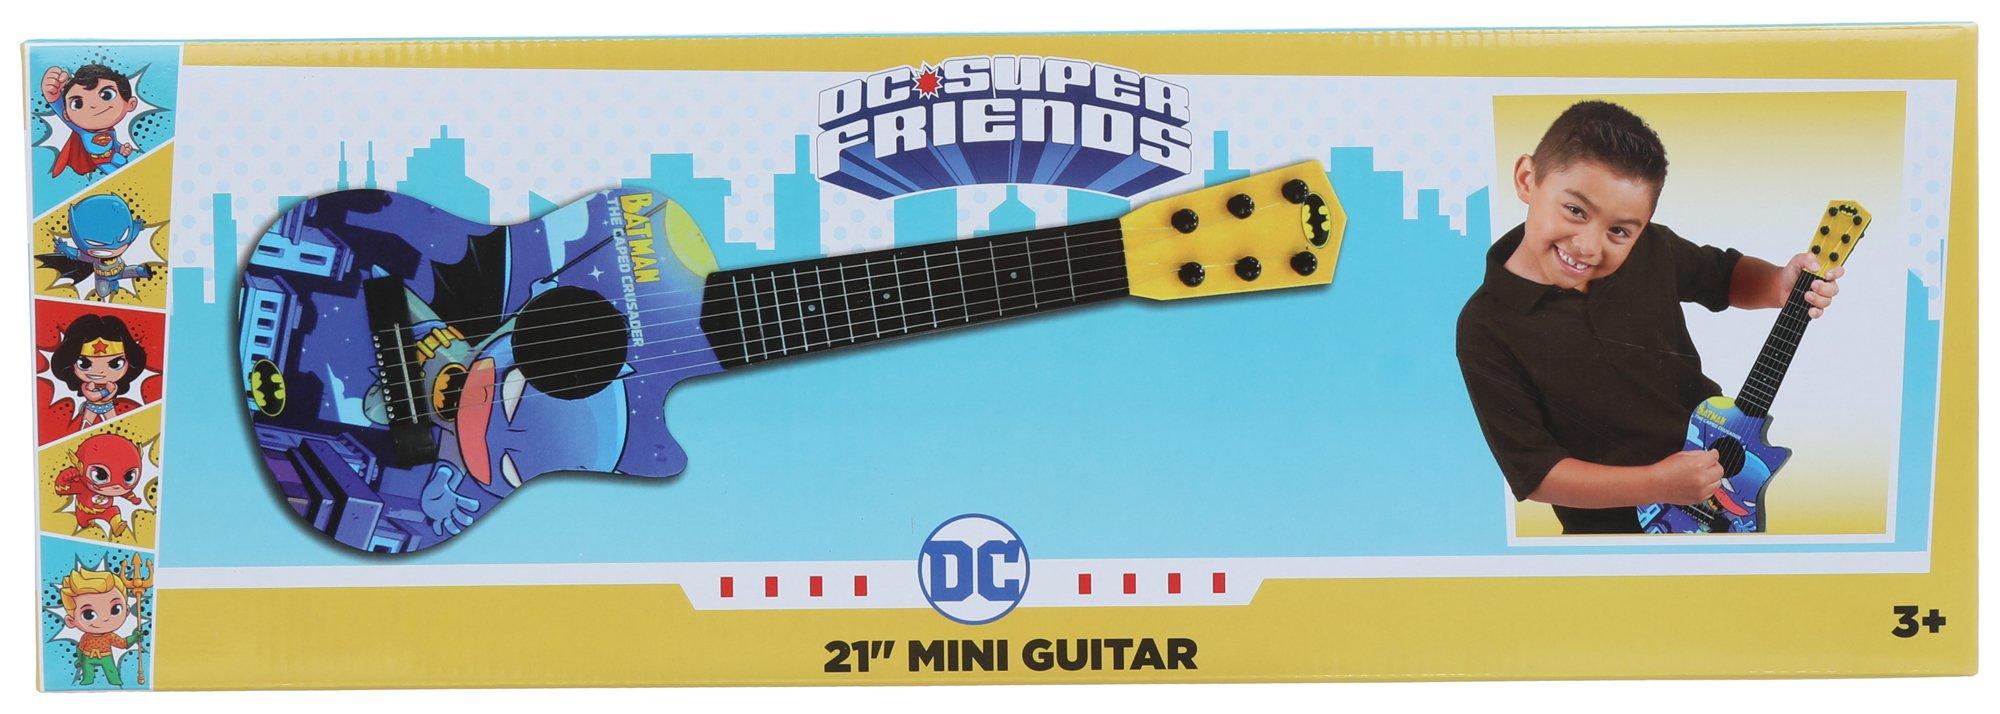 21in Batman Mini Guitar